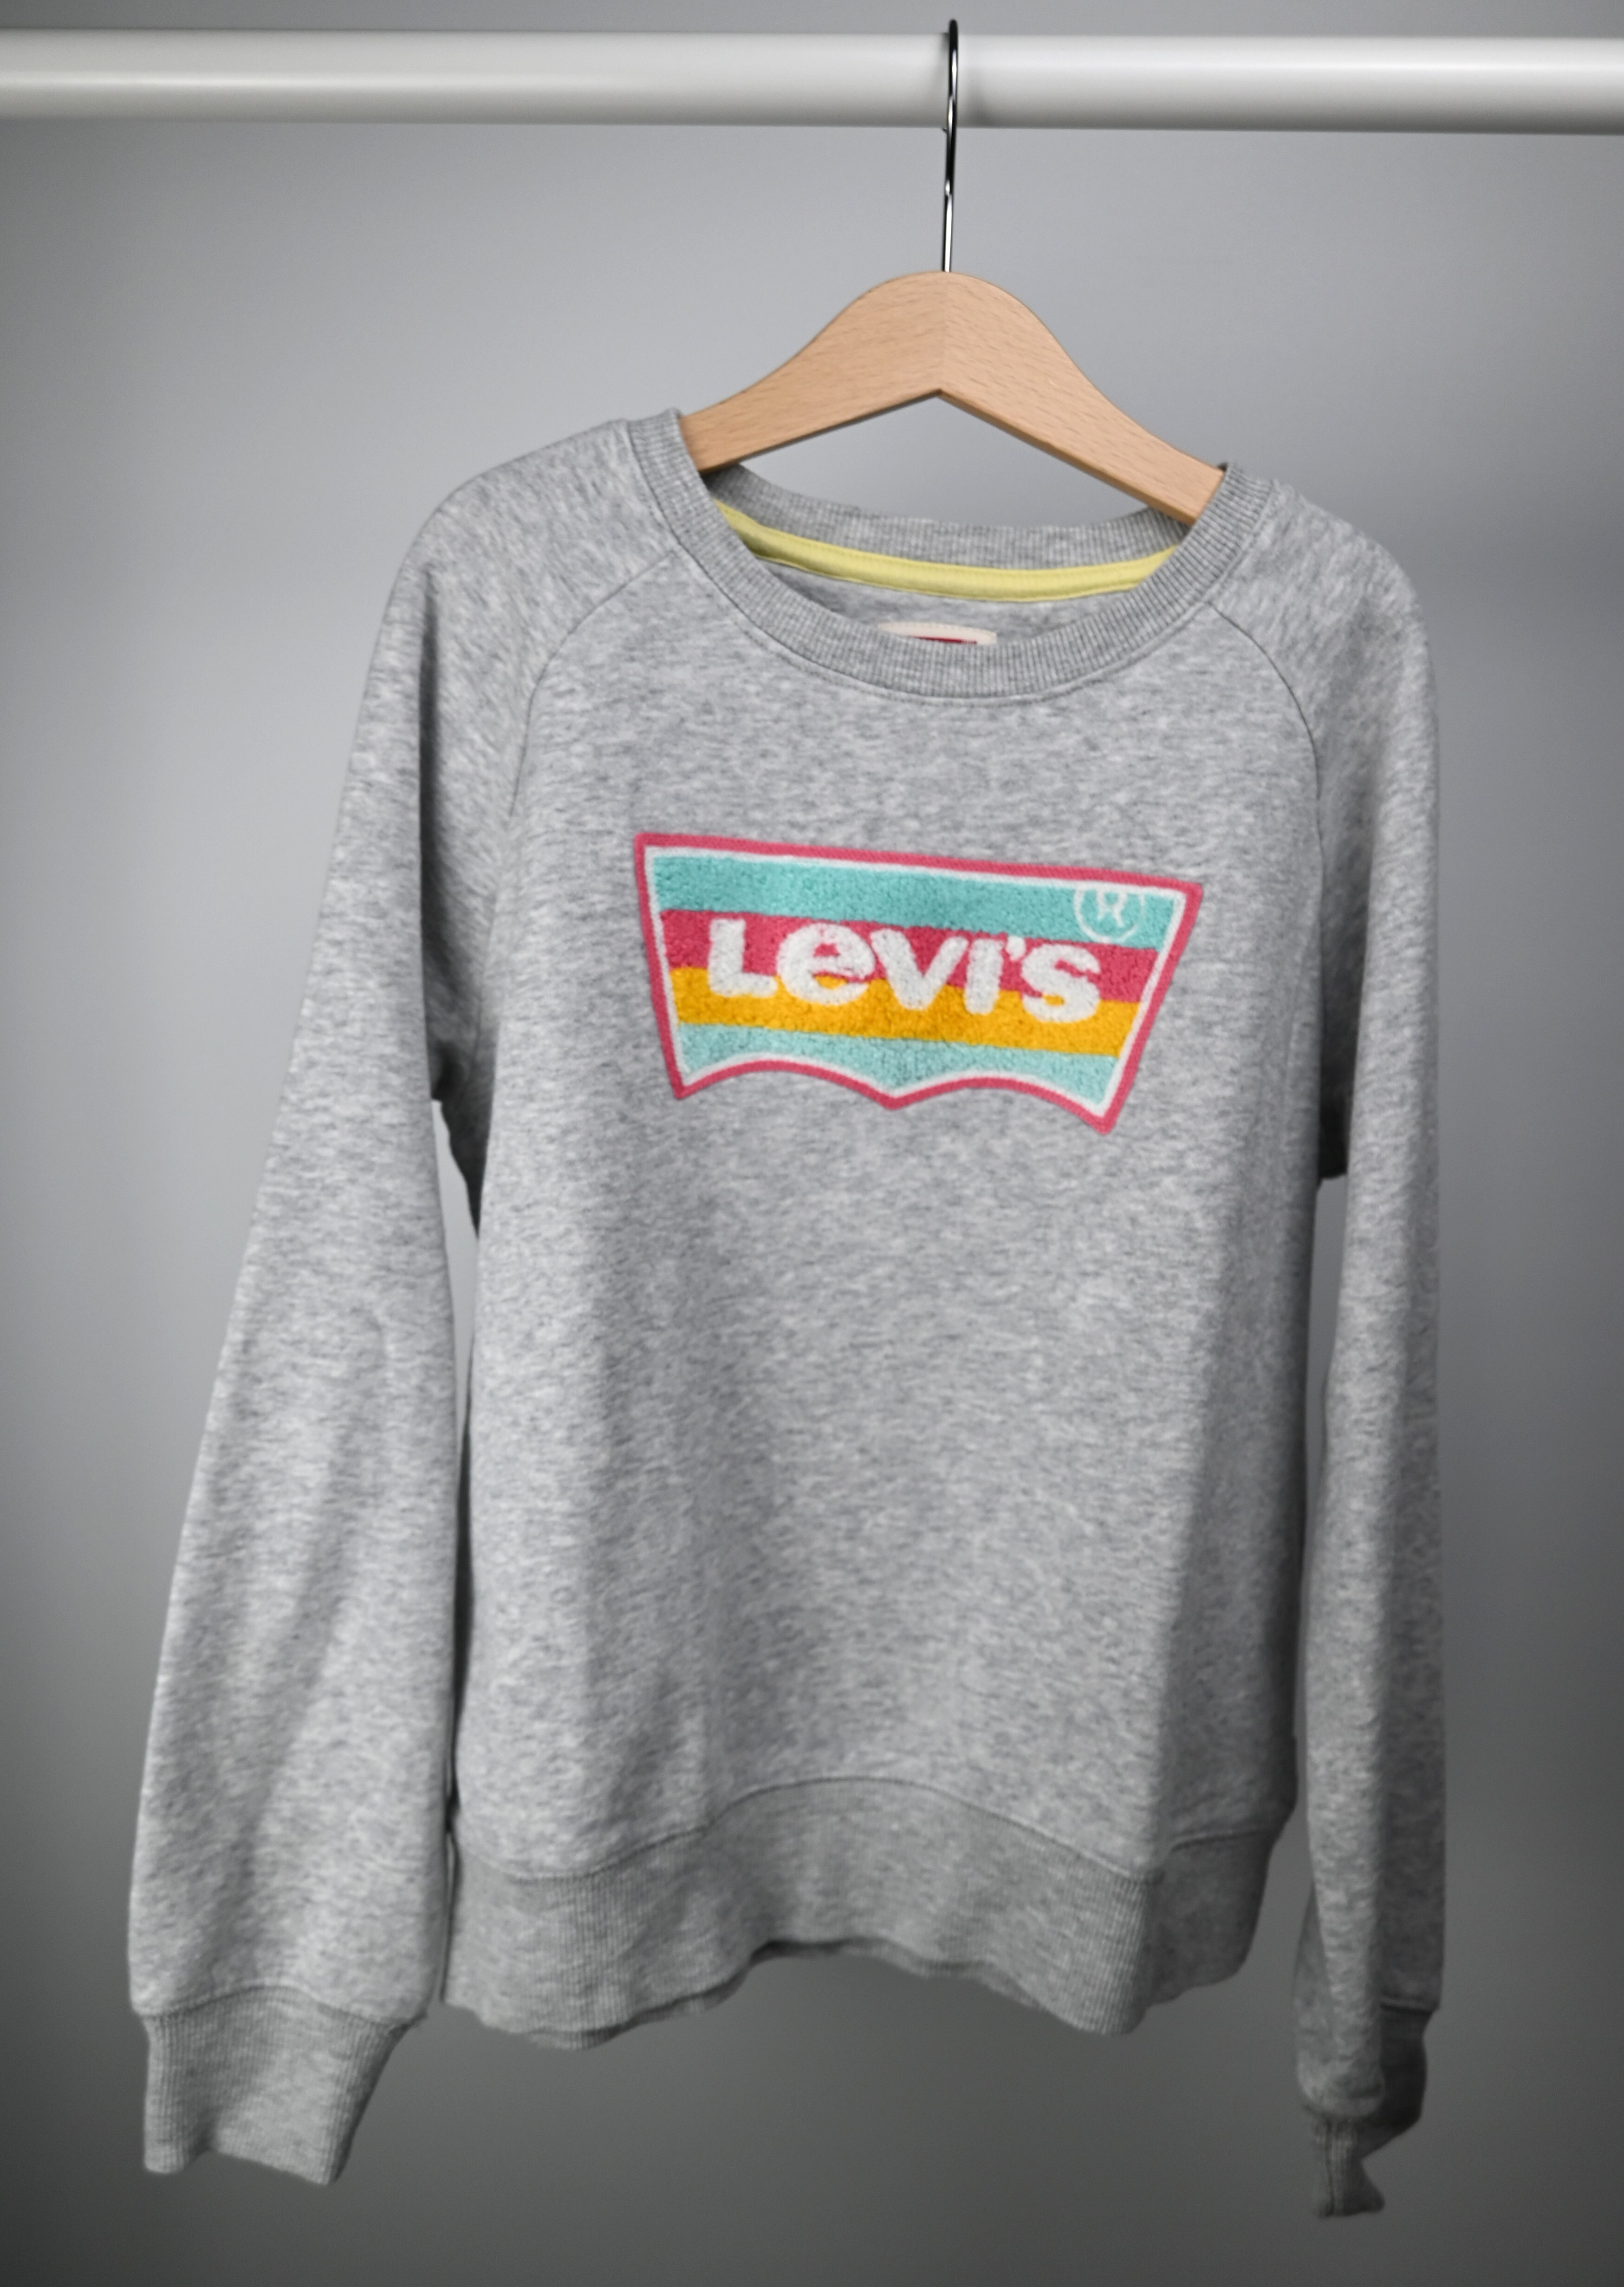 Sweater, Levi's, 12 jaar